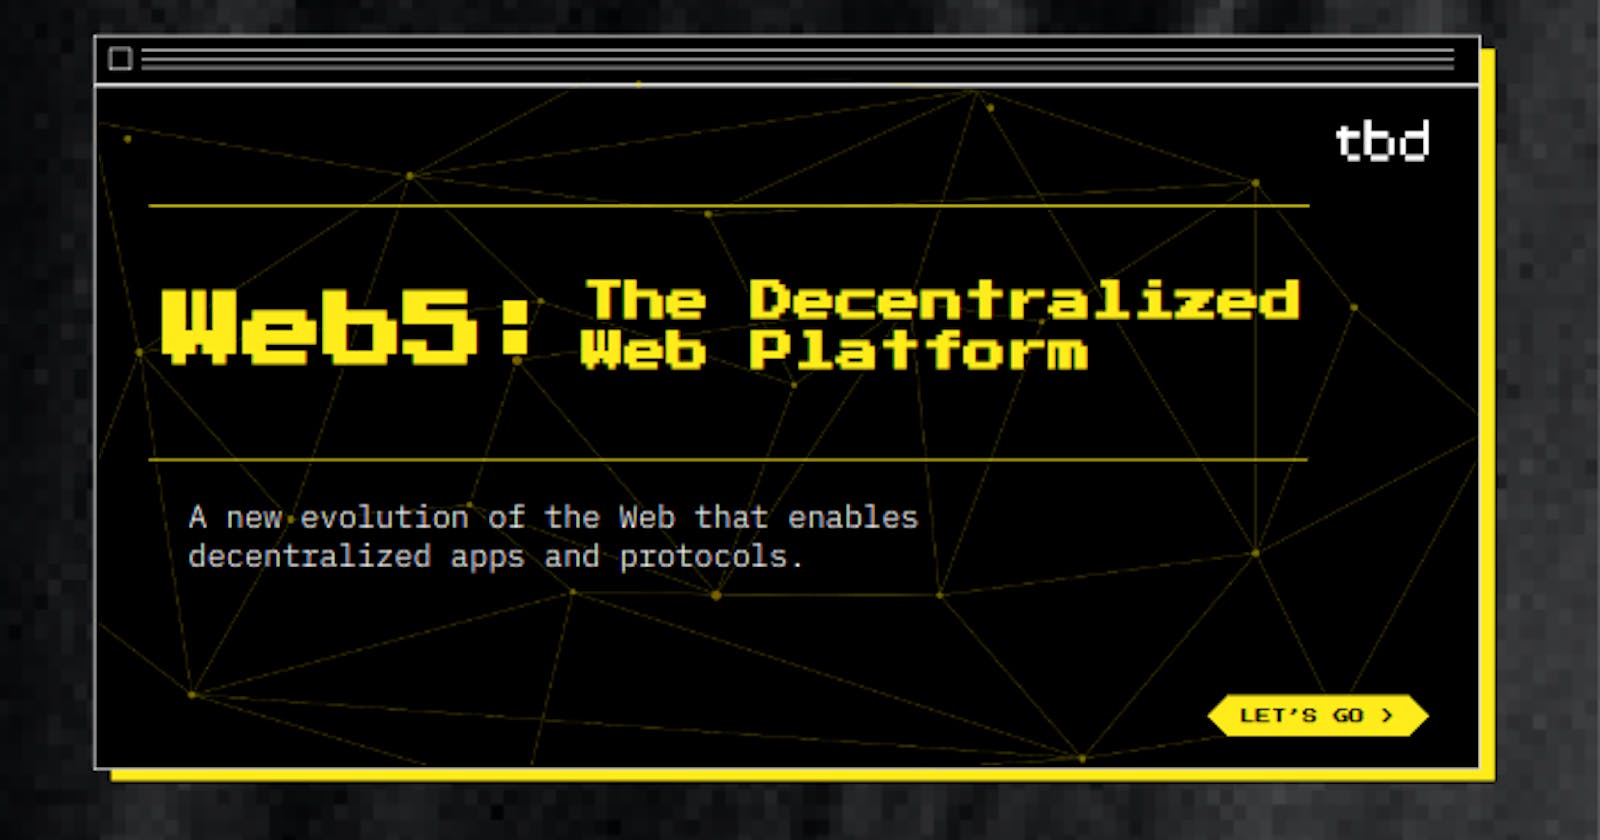 WEB 5: The Ultimate Decentralized Web Platform